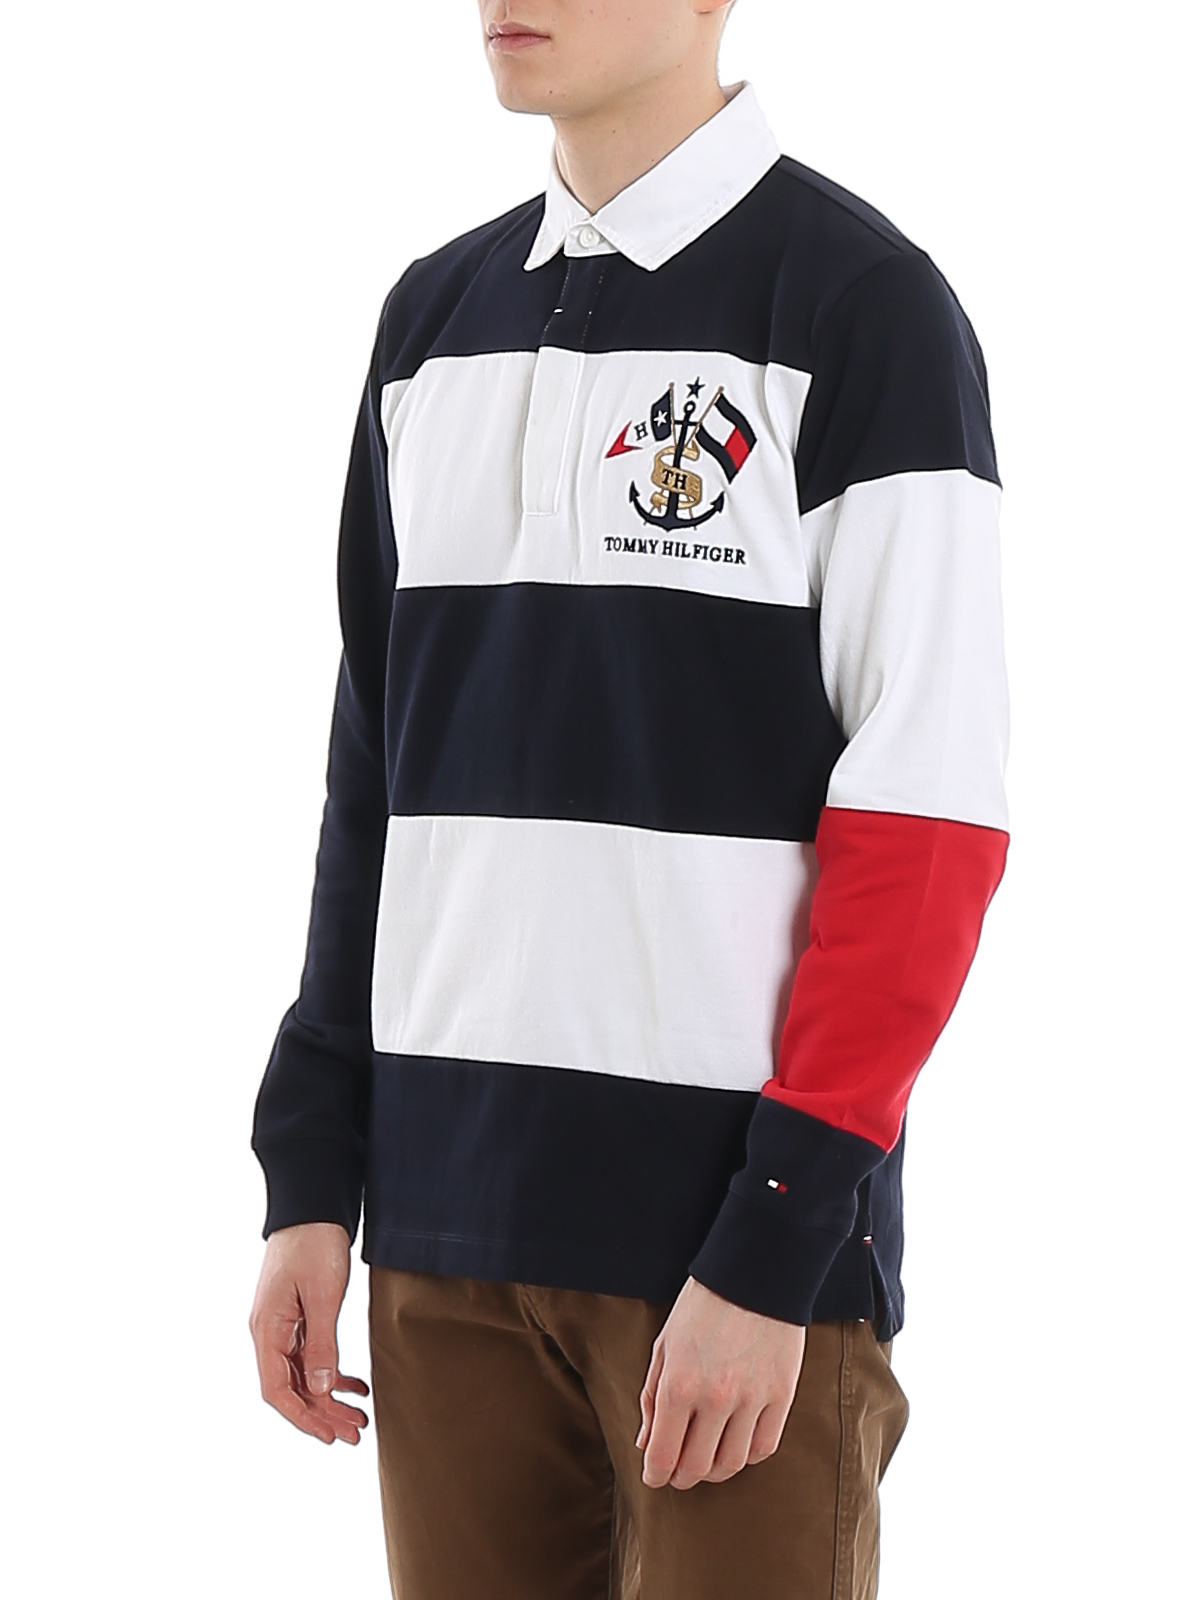 Tijdreeksen gokken Ongrijpbaar Polo shirts Tommy Hilfiger - Striped polo shirt - MW0MW124680A4